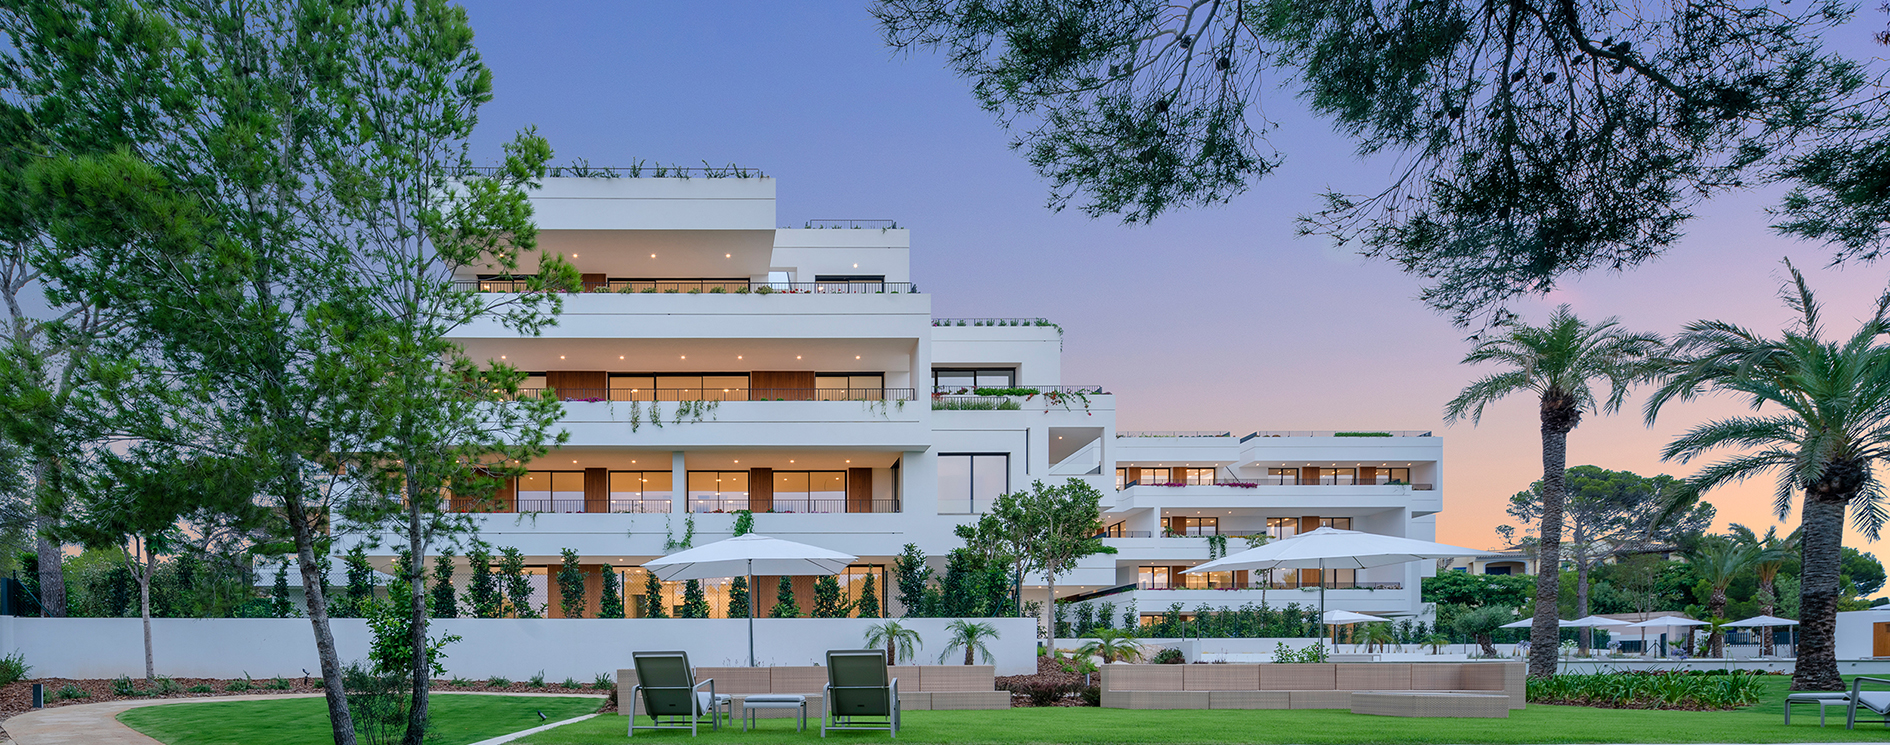 Abgeschlossen: Domus Vivendi stellt Apartmentanlage GREEN ELEMENTS fertig